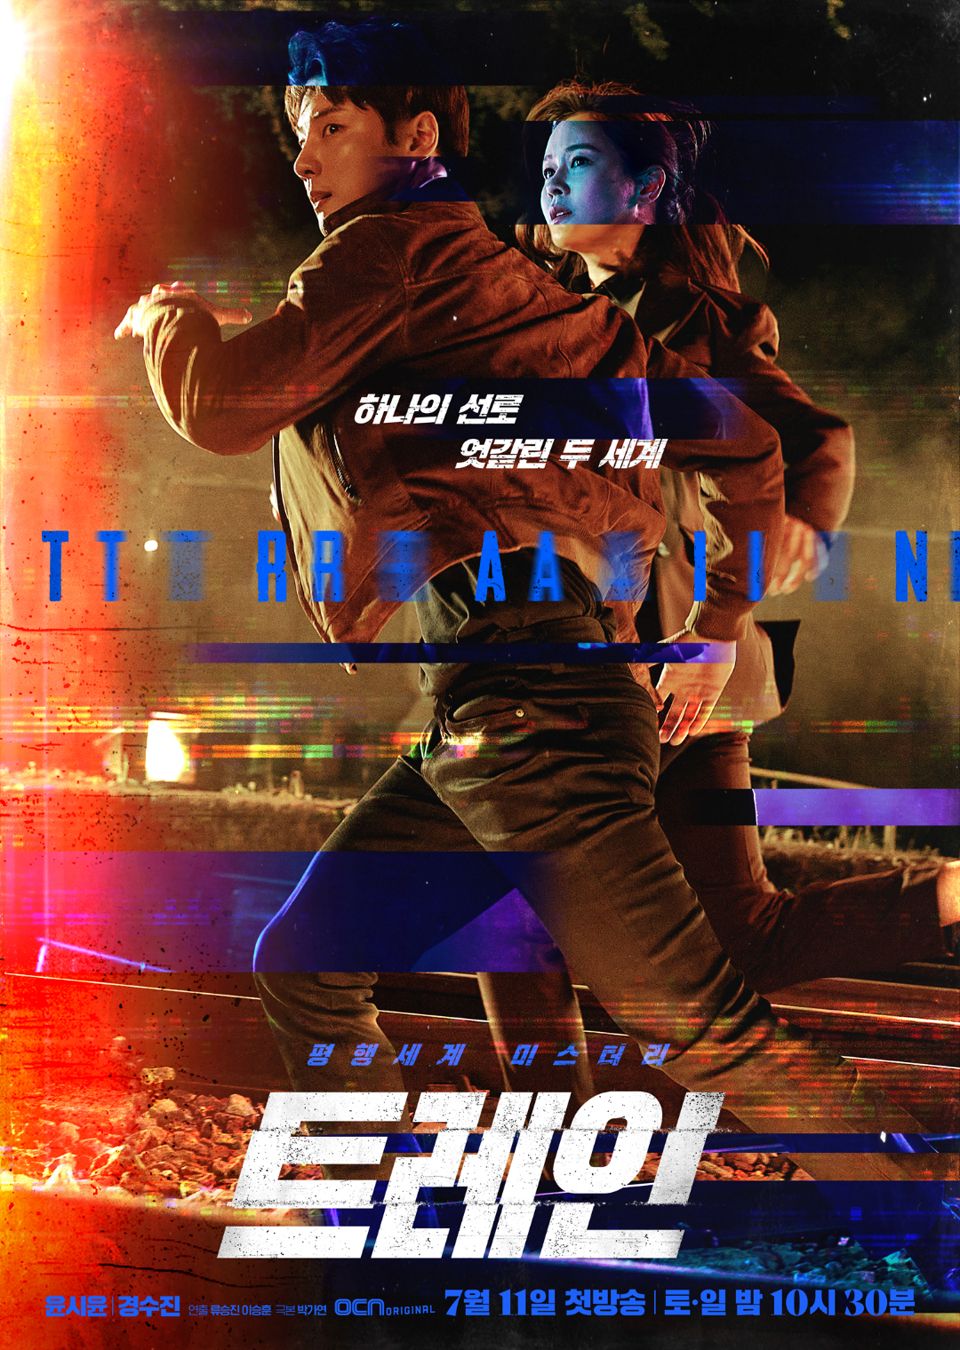 yoon-shi-yoon-upcoming-drama-reveals-new-poster-and-stills-for-drama-train-1